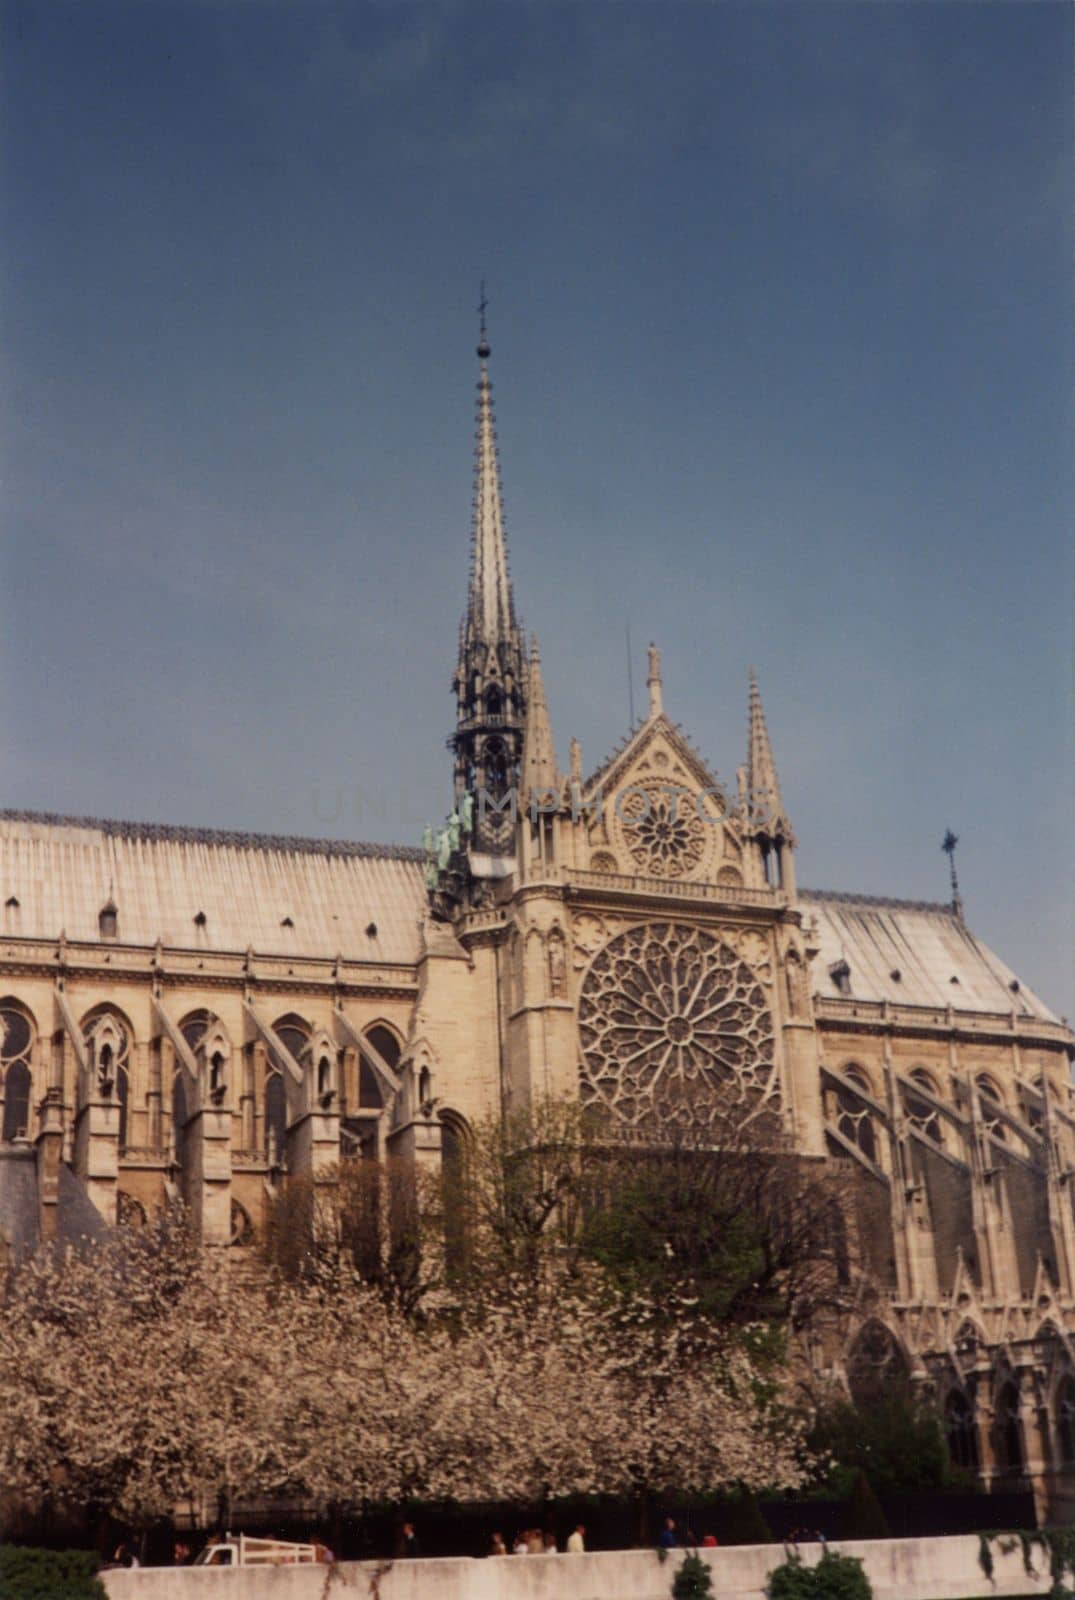 Vintage view circa 1992 of Notre Dame de Paris (meaning Our Lady of Paris) cathedral church in Paris, France